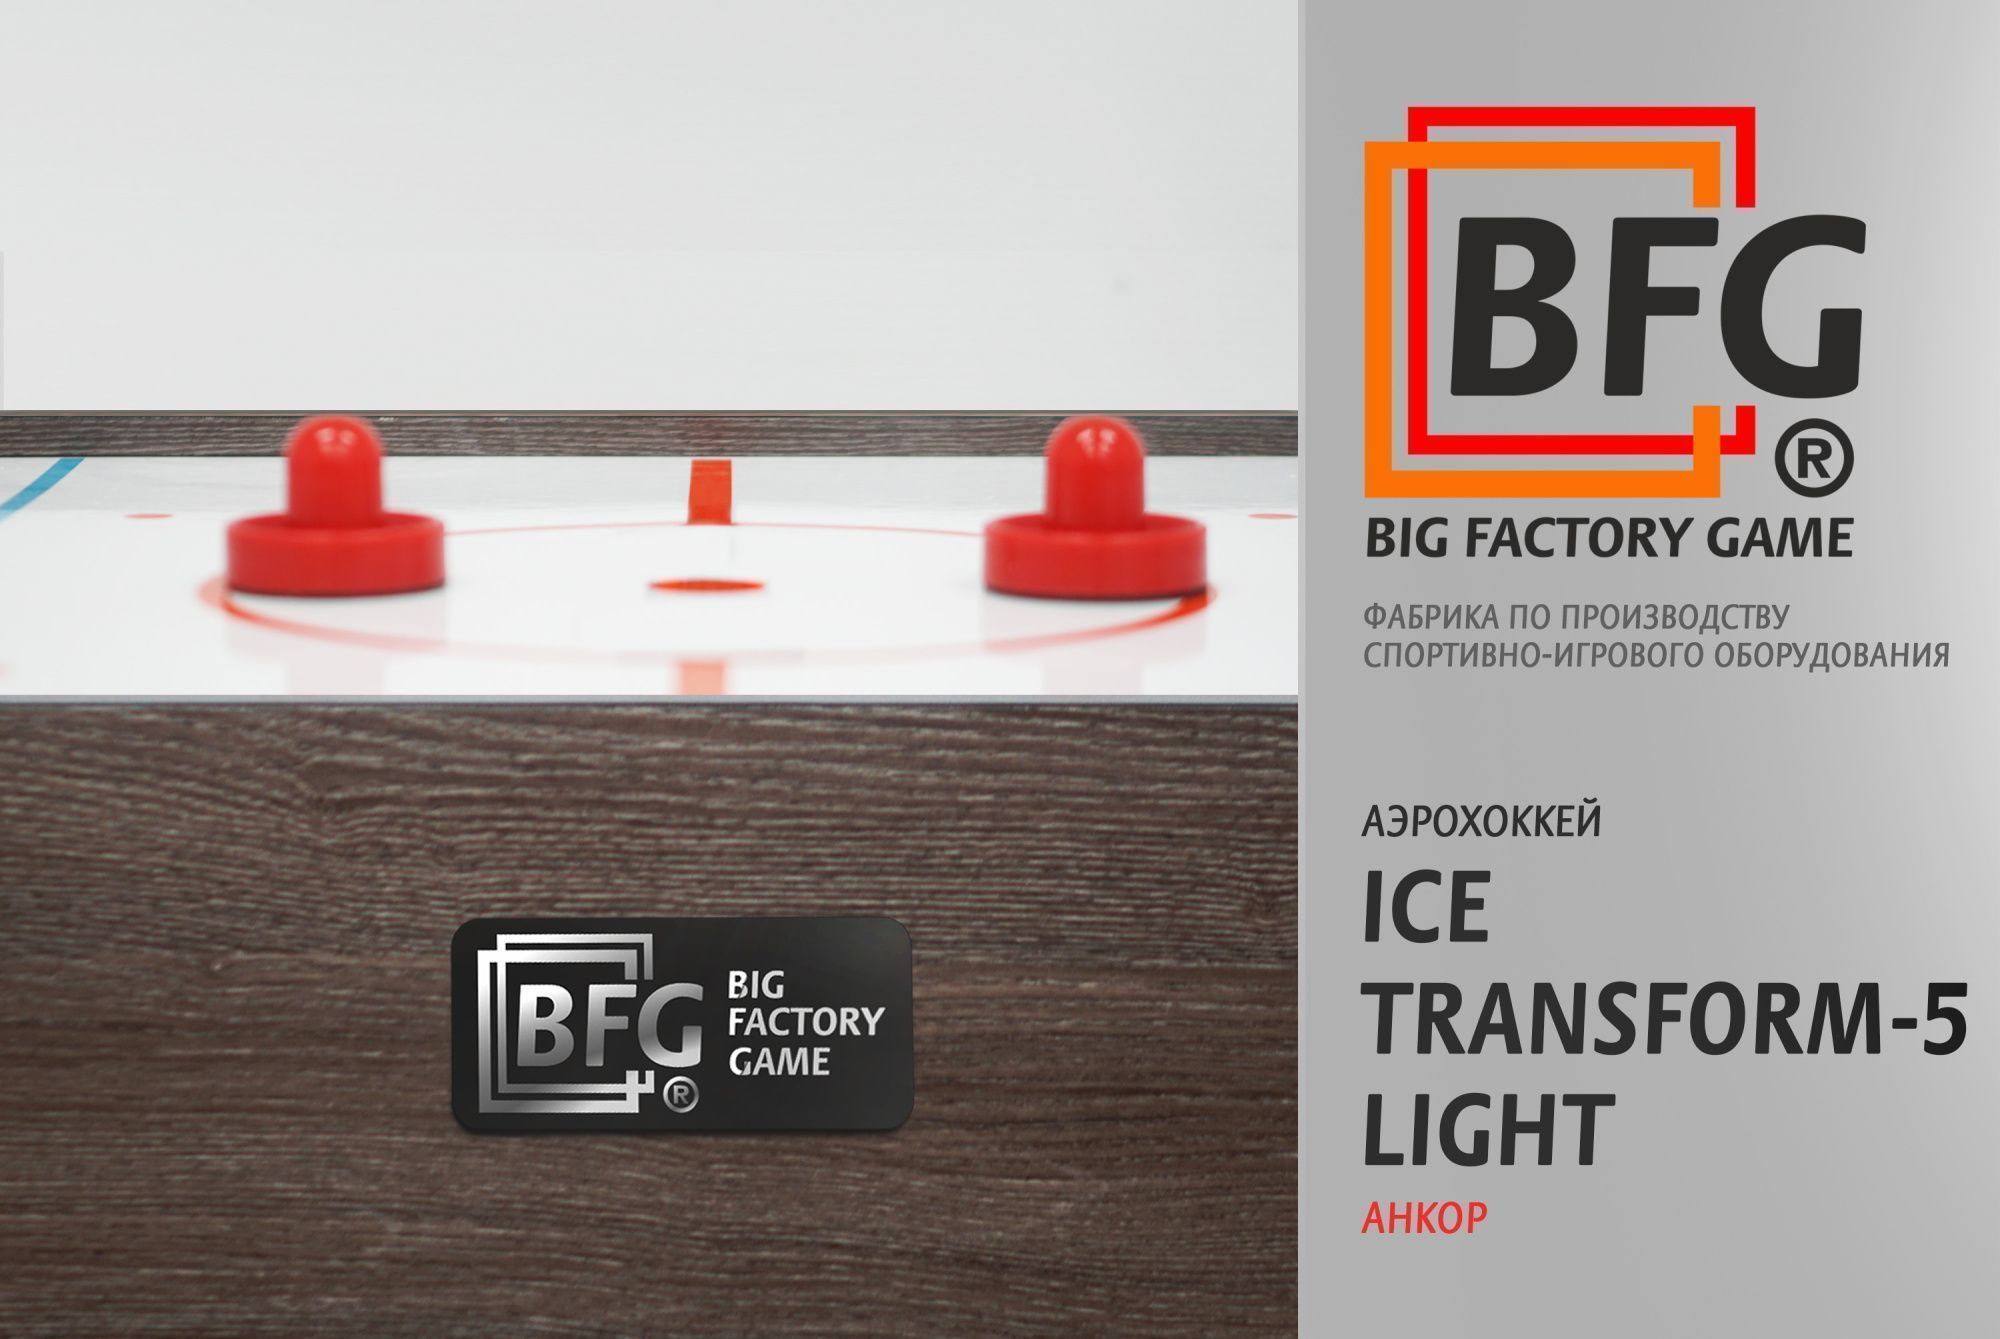 Аэрохоккей BFG Ice Transform 5 (Анкор) Light